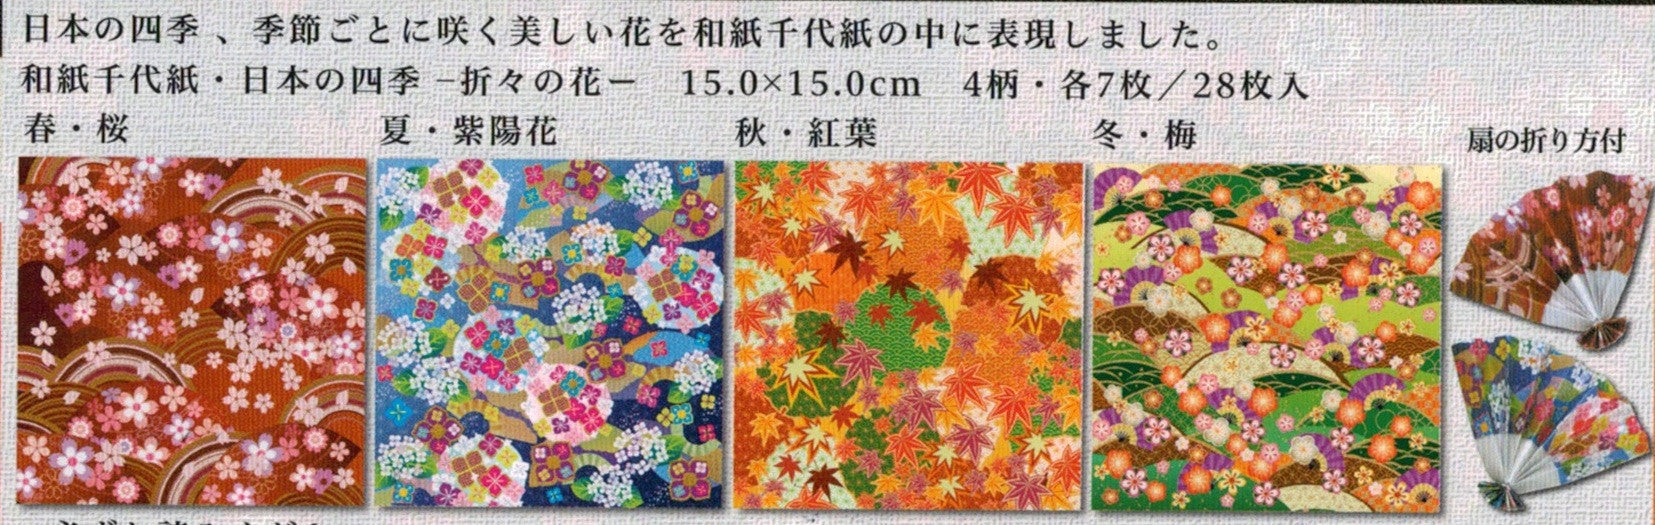 Japan's Four Seasons Print Origami Paper - Details